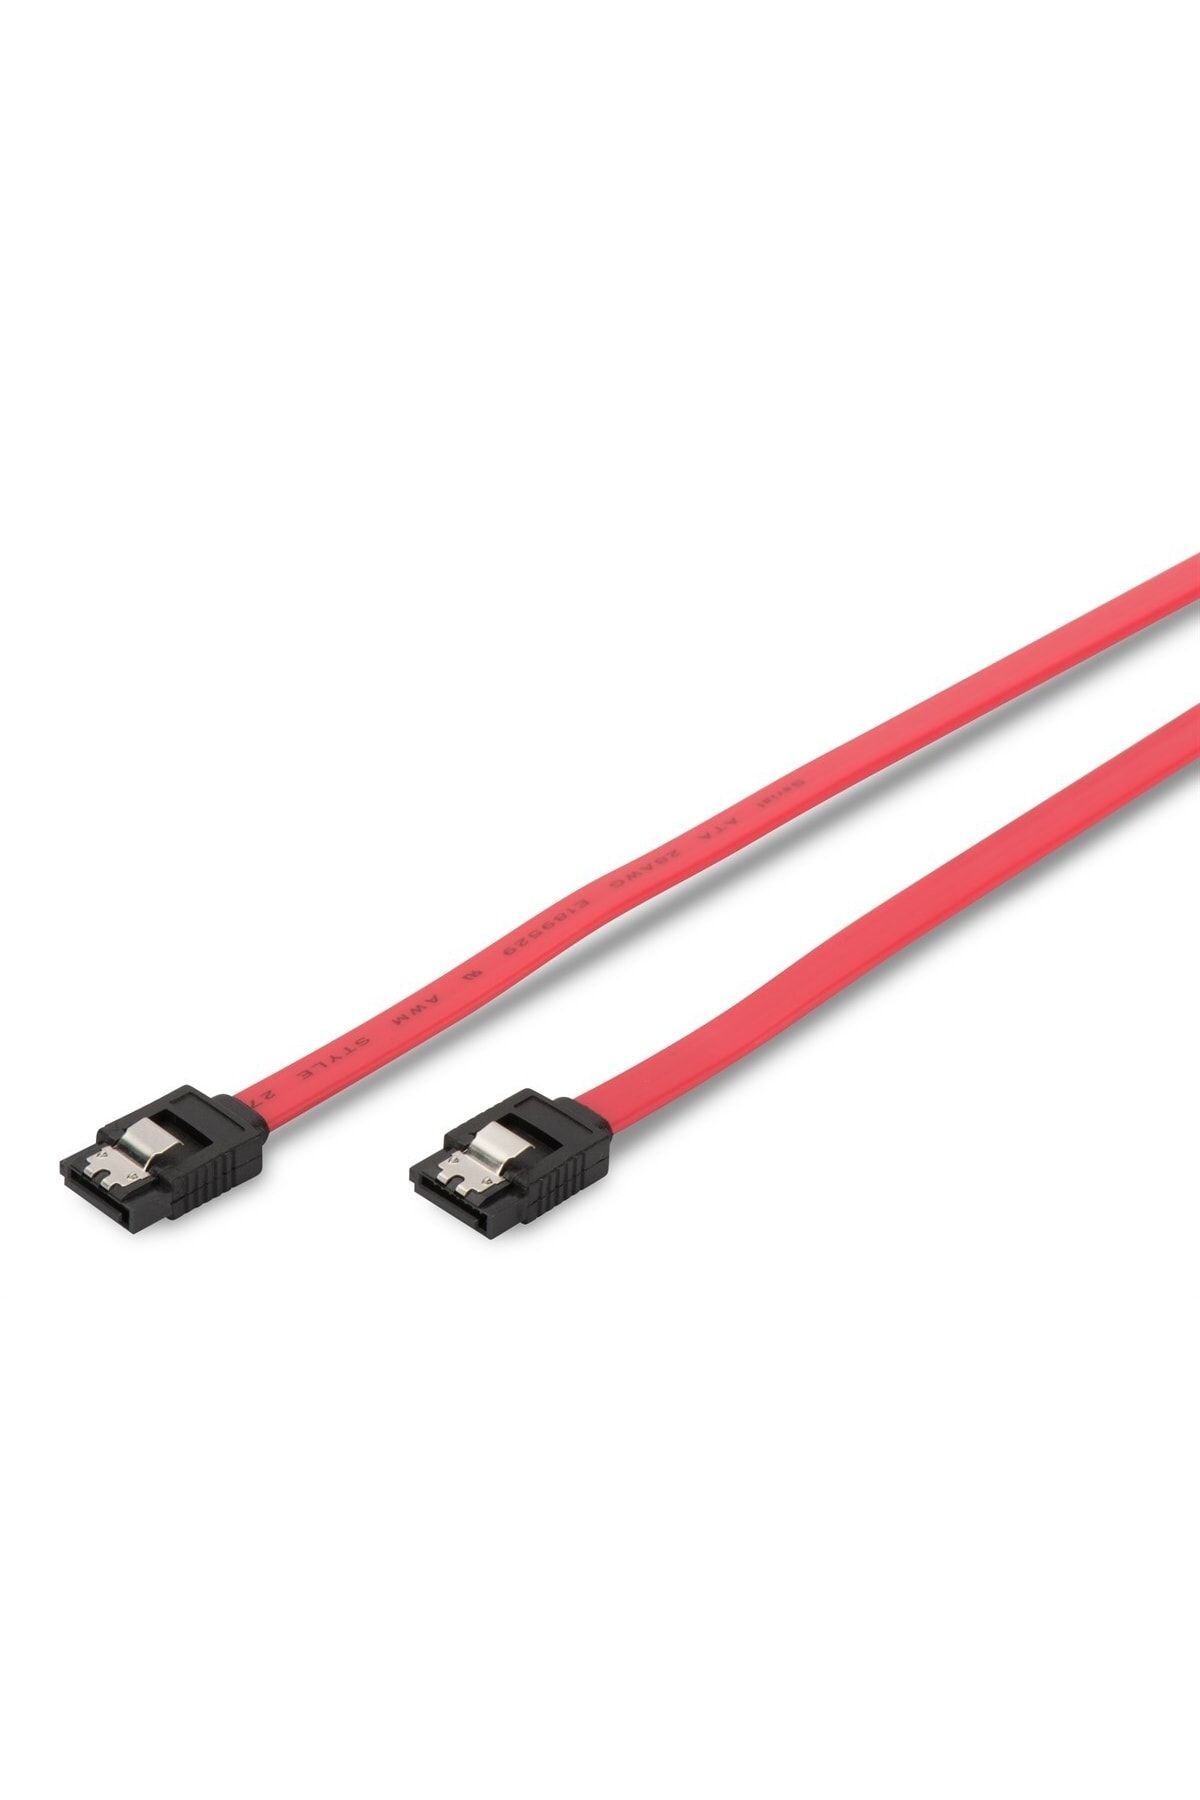 Assmann SATA Kablosu, SATA II/III, L-Tipi dişi - L-Tipi dişi, 0.3 metre, düz, UL, kırmızı renk